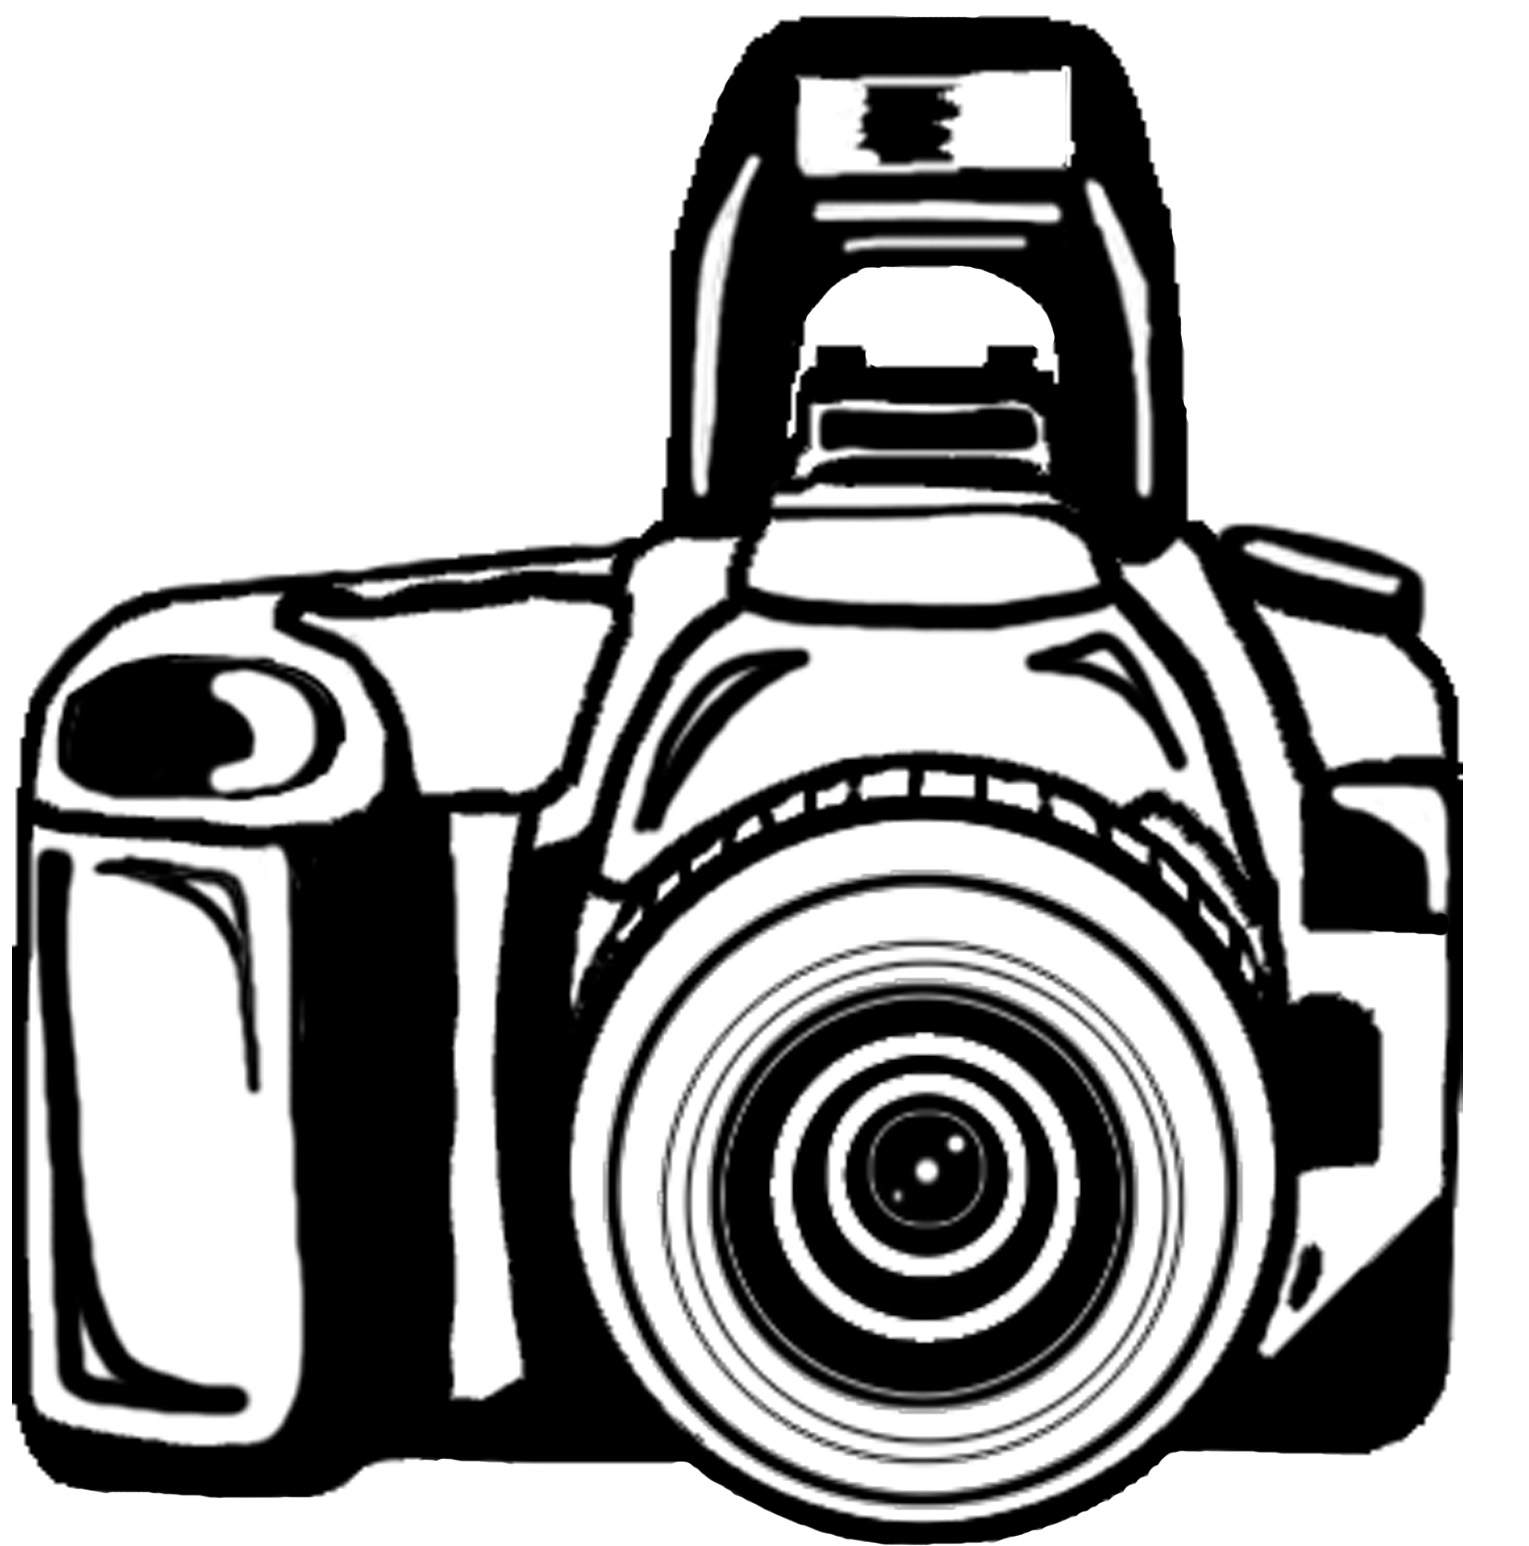 Pix For > Simple Camera Clip Art